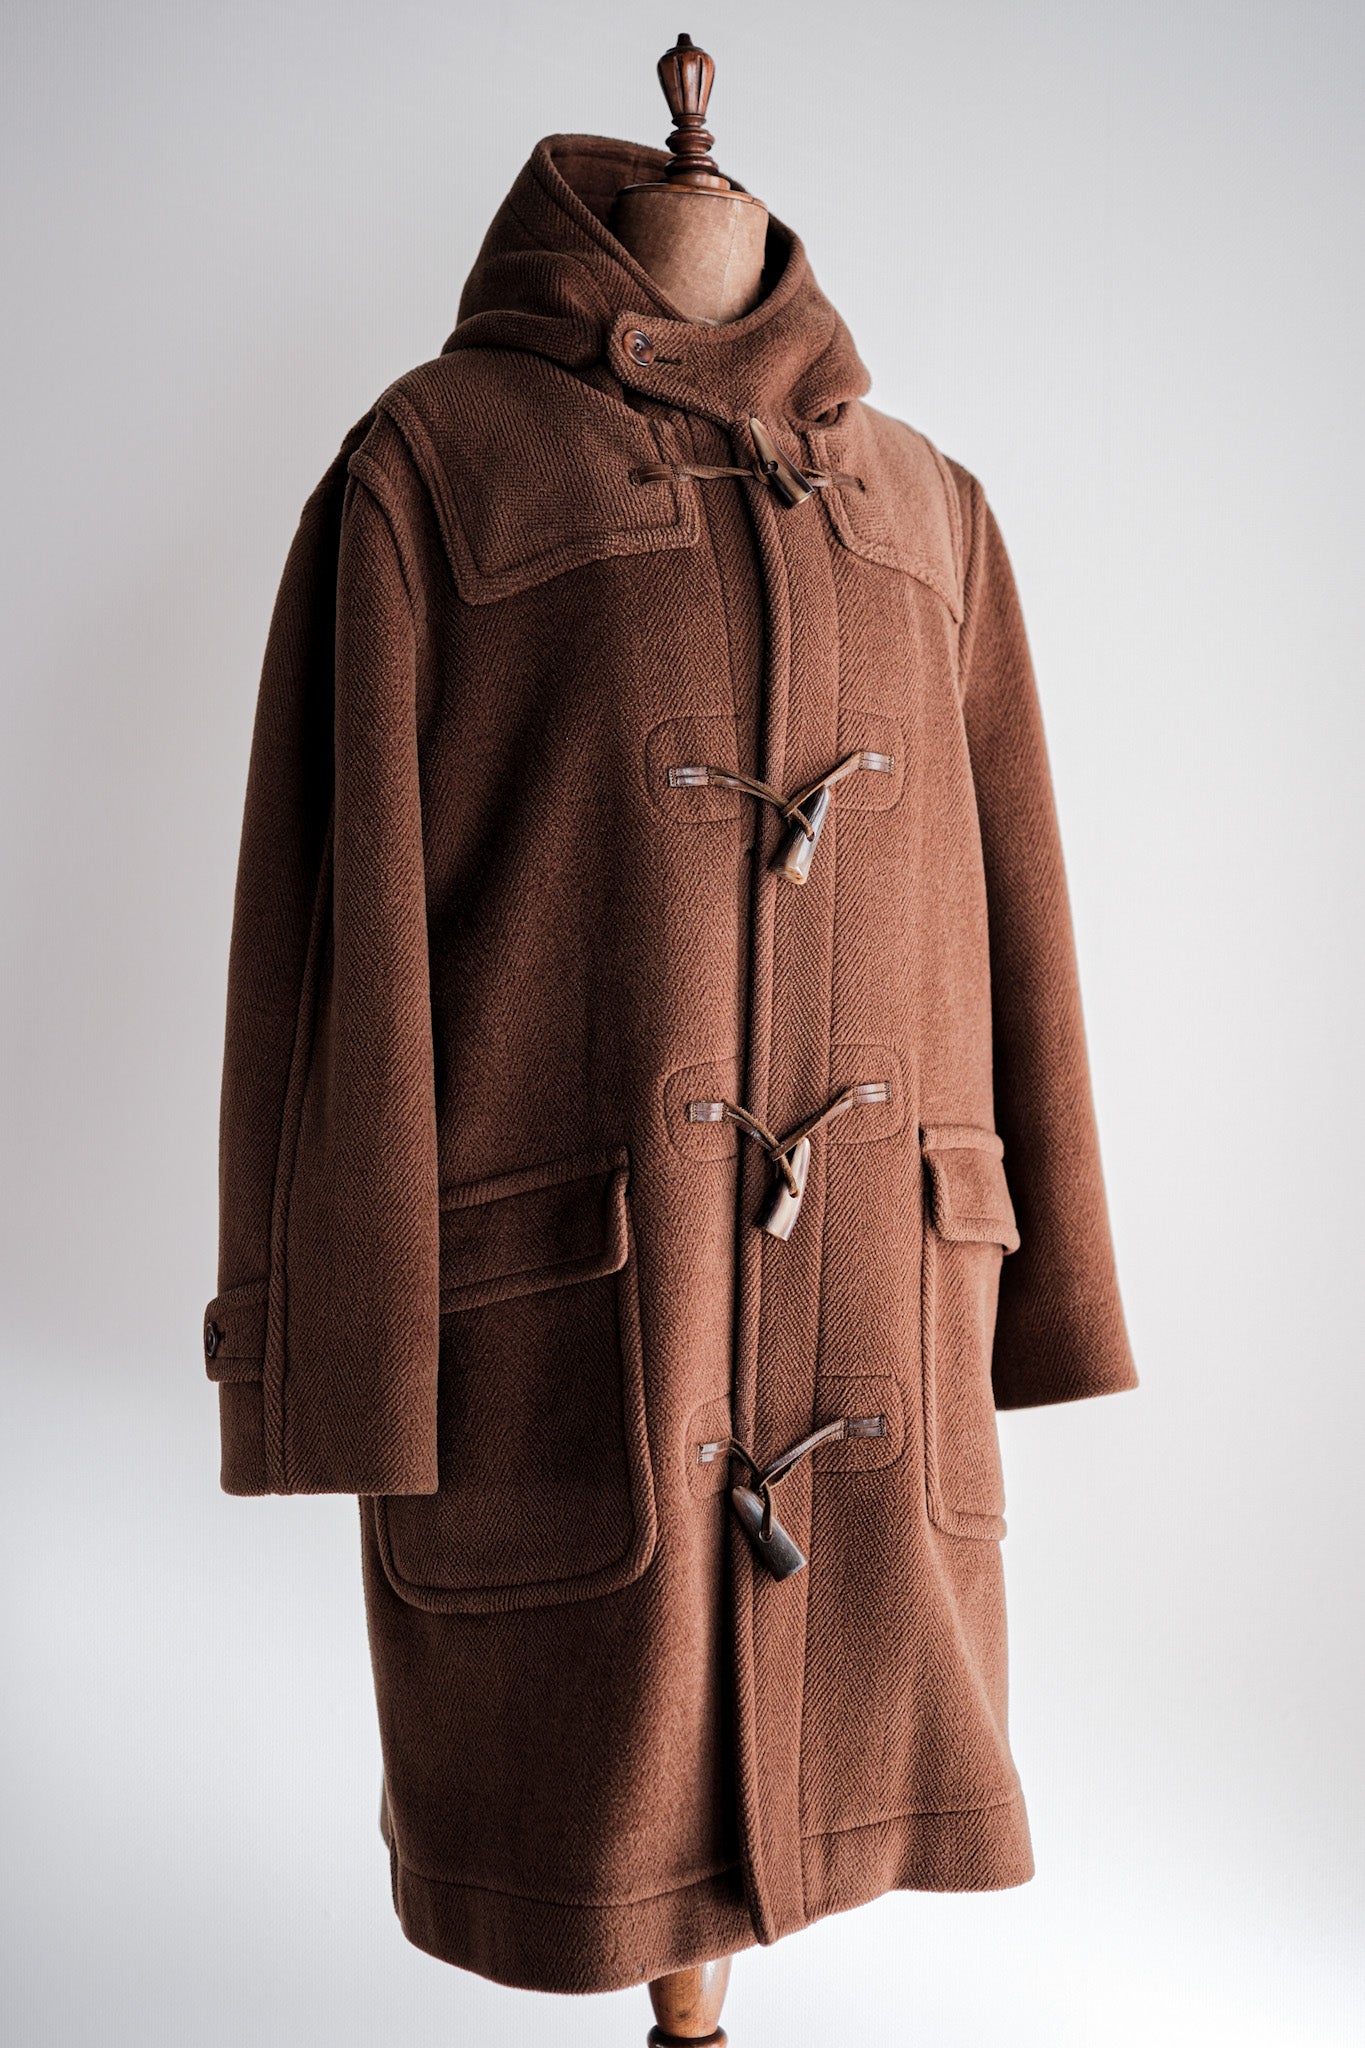 [~ 90's] Old Invertere Wool Duffle Coat "Moorbrook" "De Paz separate Note"